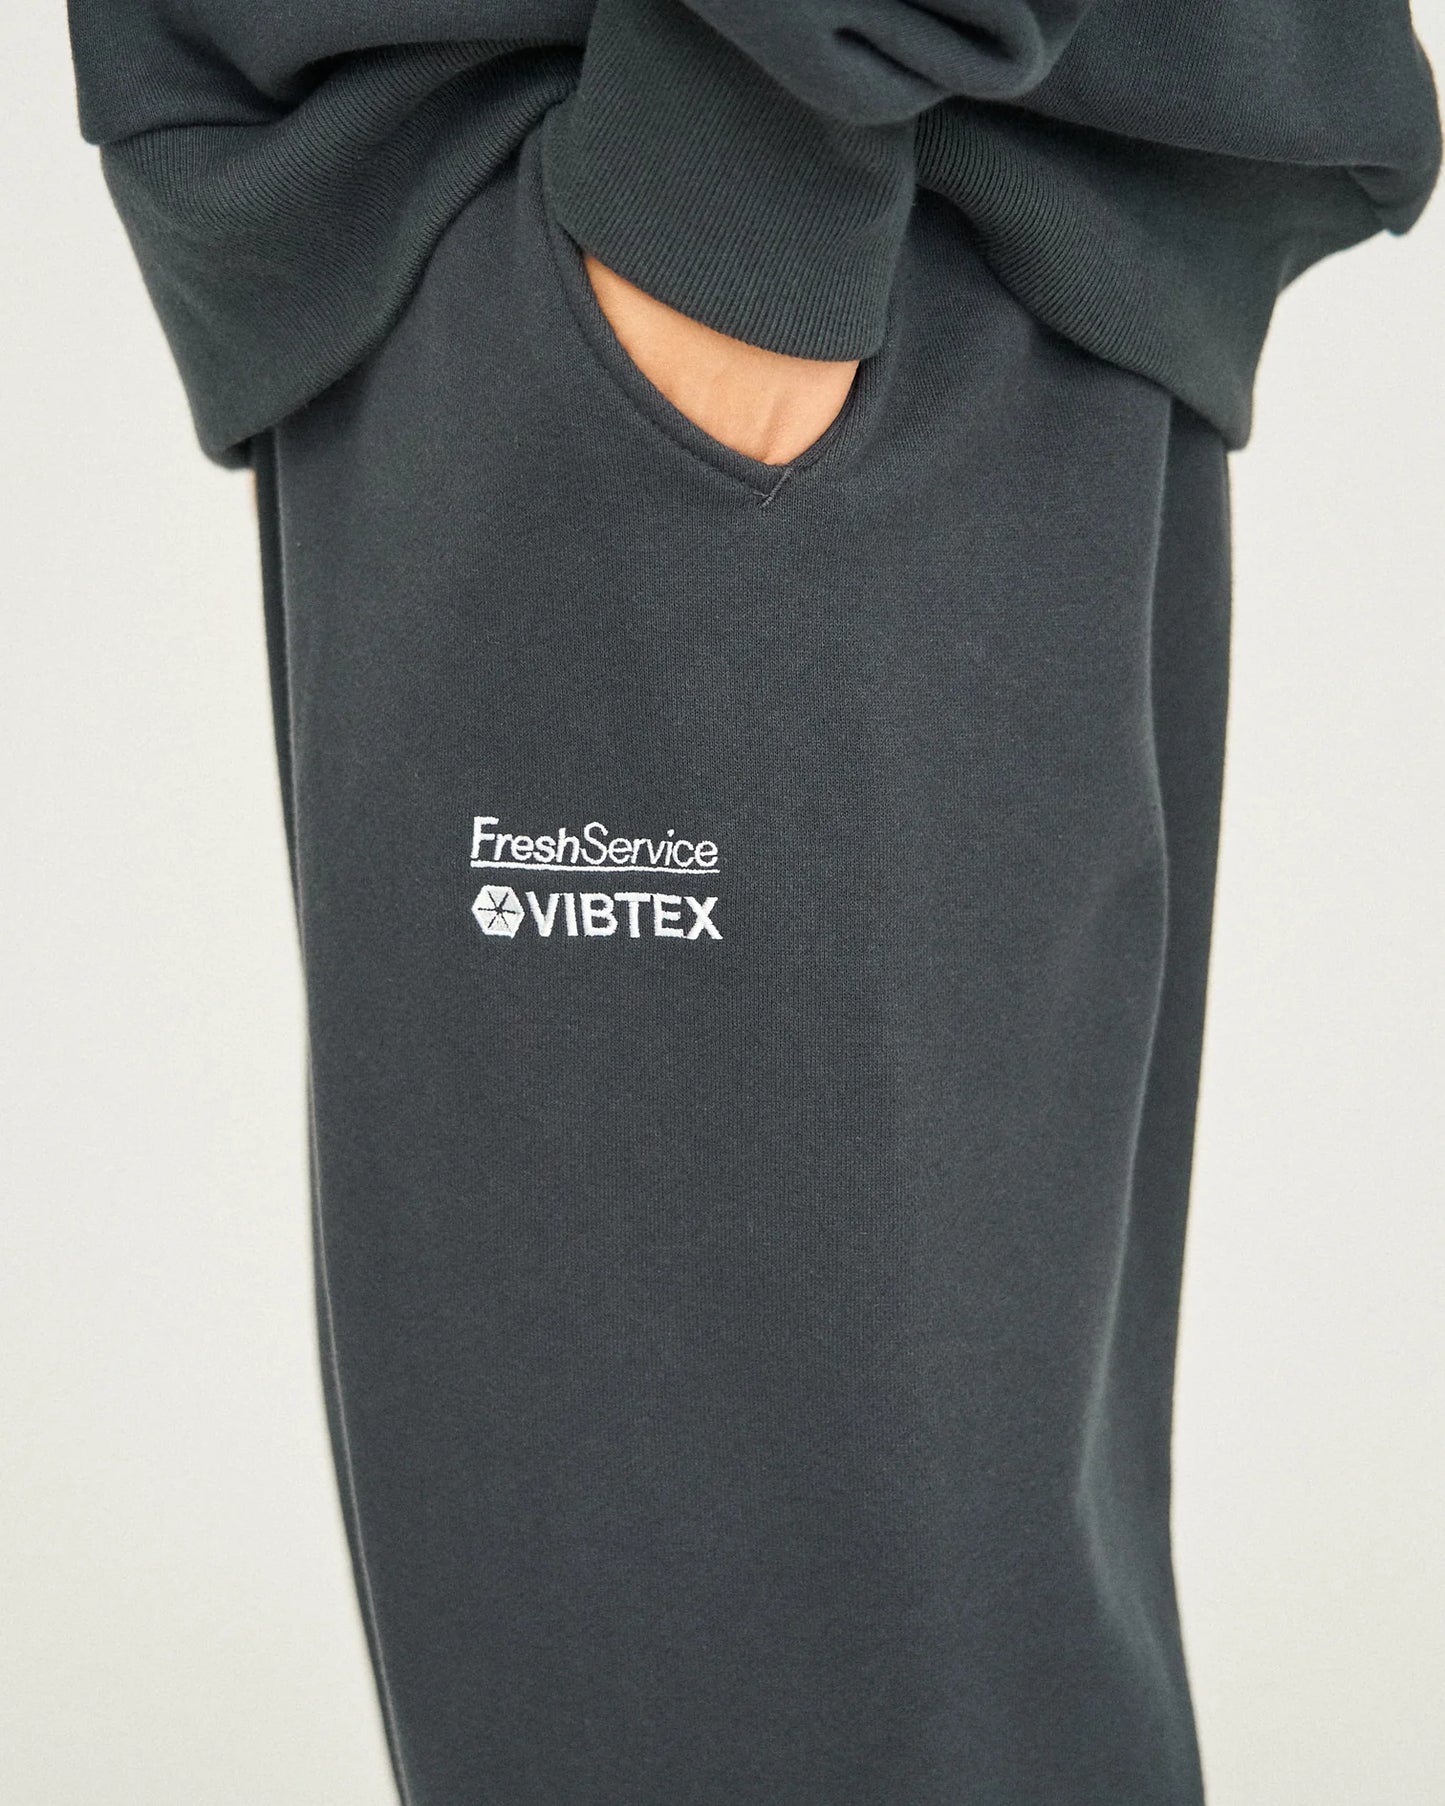 FreshService VIBTEX for FreshService VIBTEX SWEAT PANTS